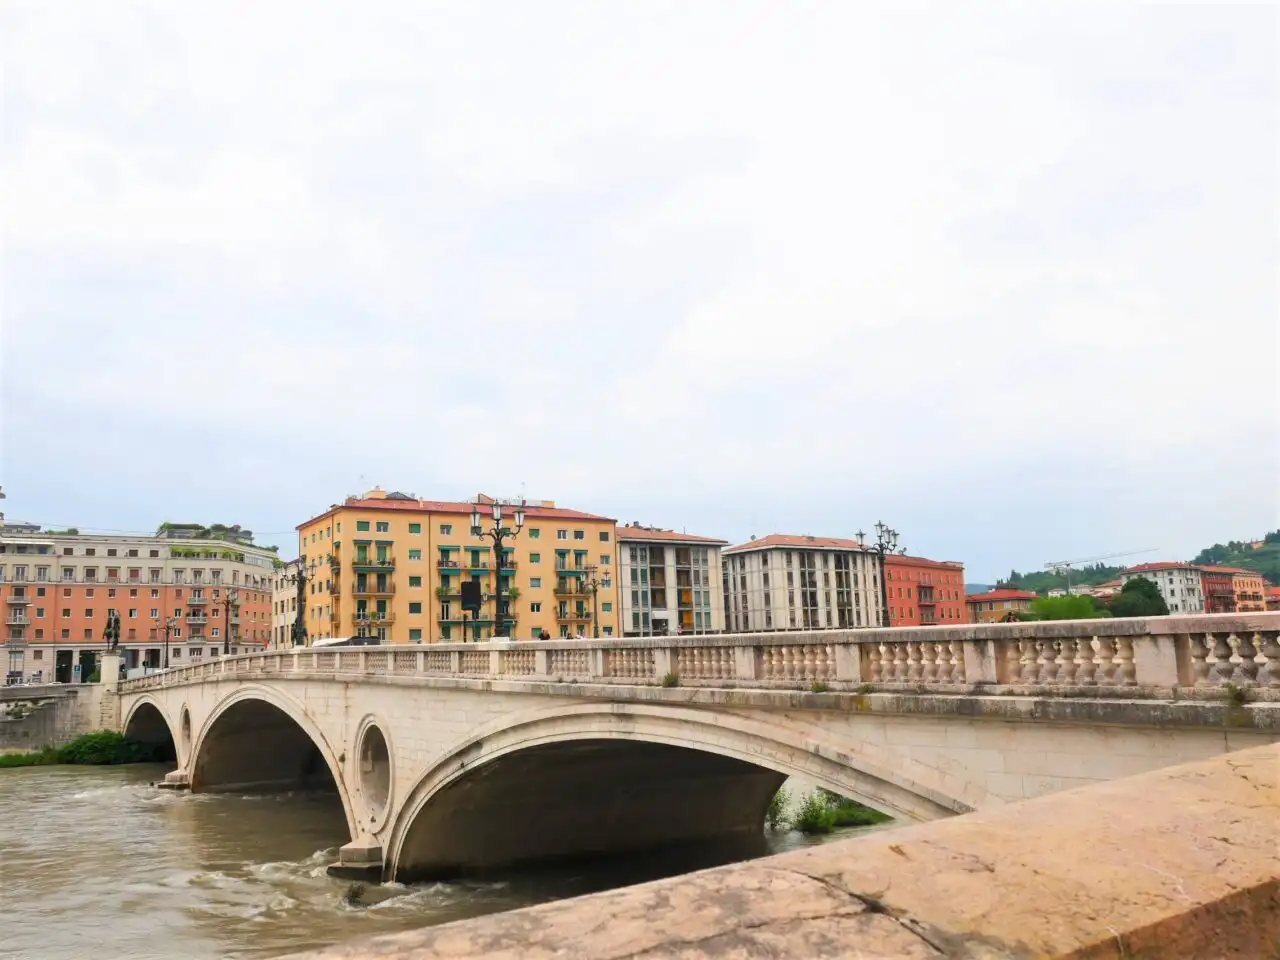 Bridge and houses in Verona